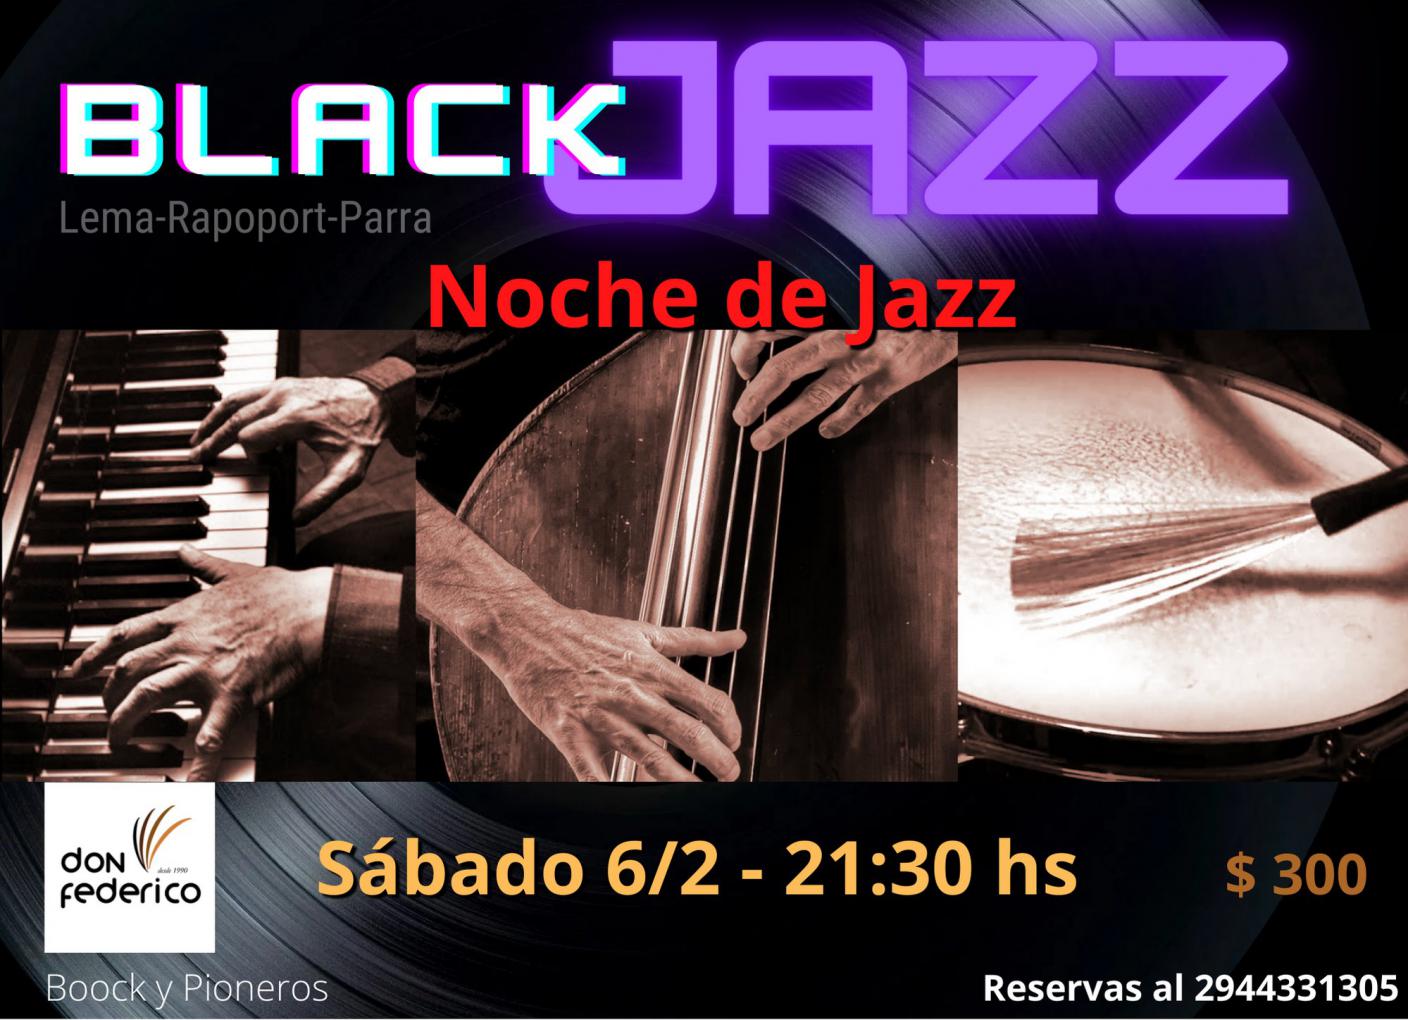 BlackJazz - Noche de jazz